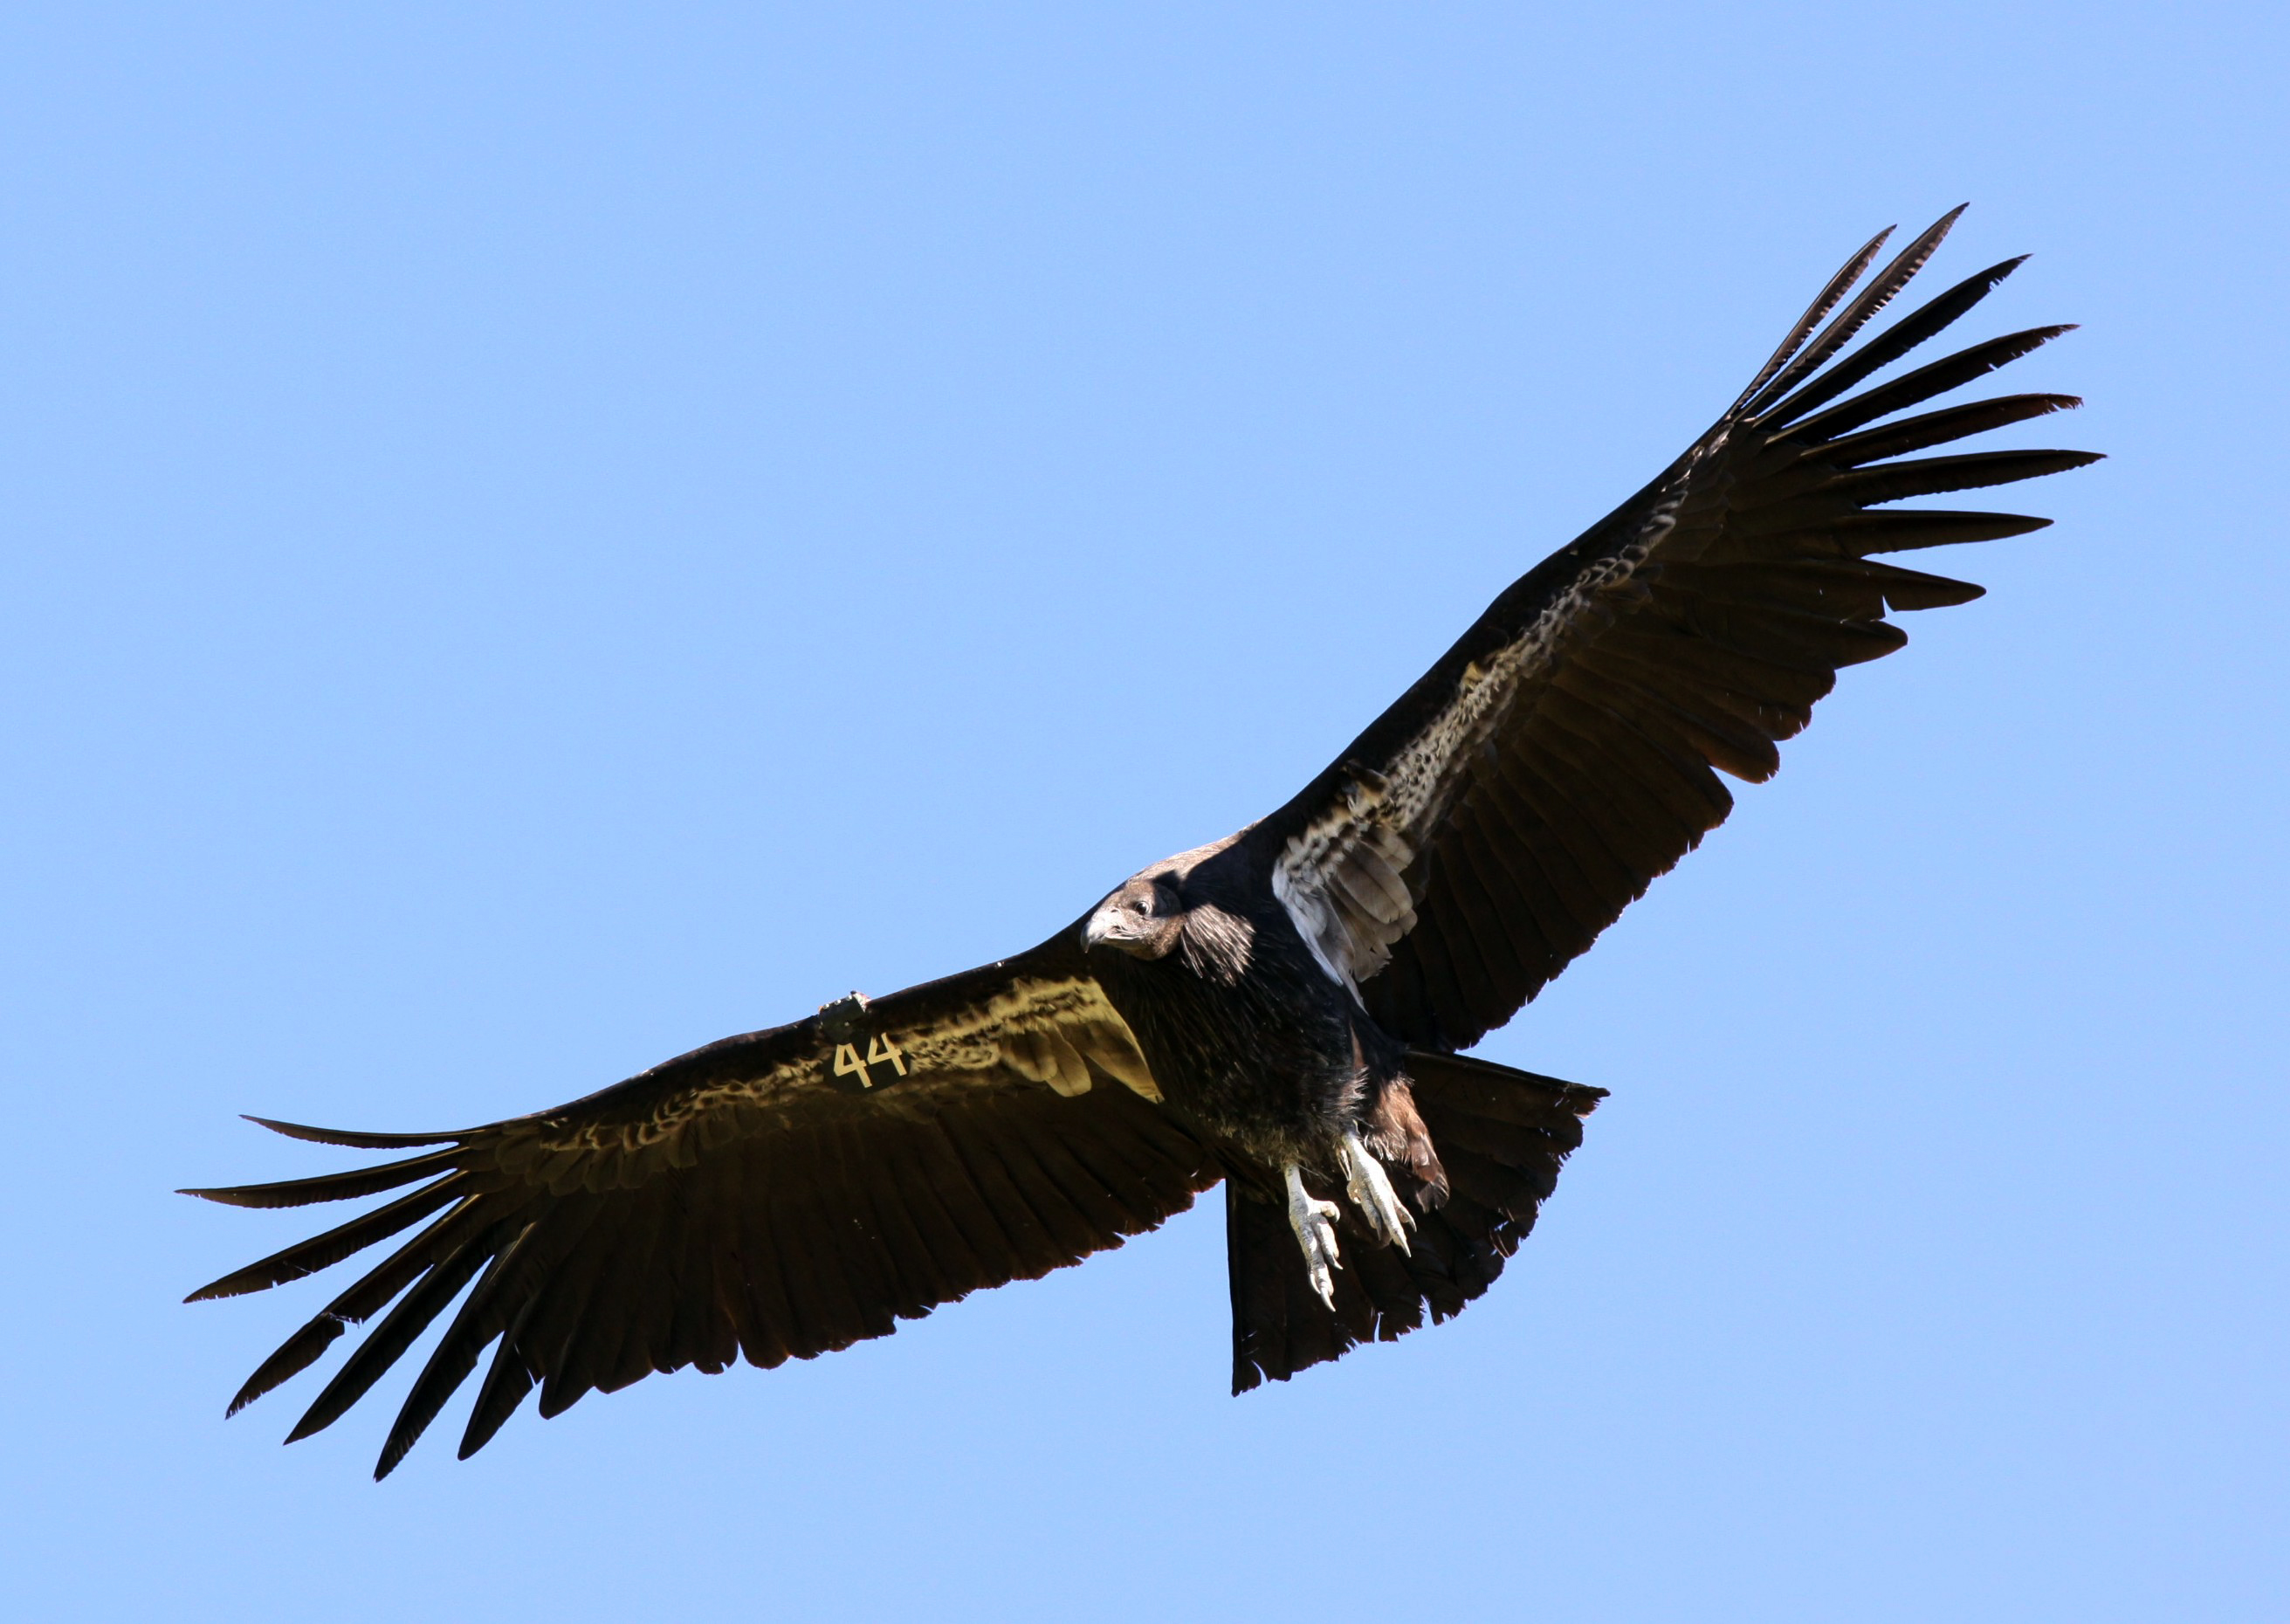 A condor soars overhead